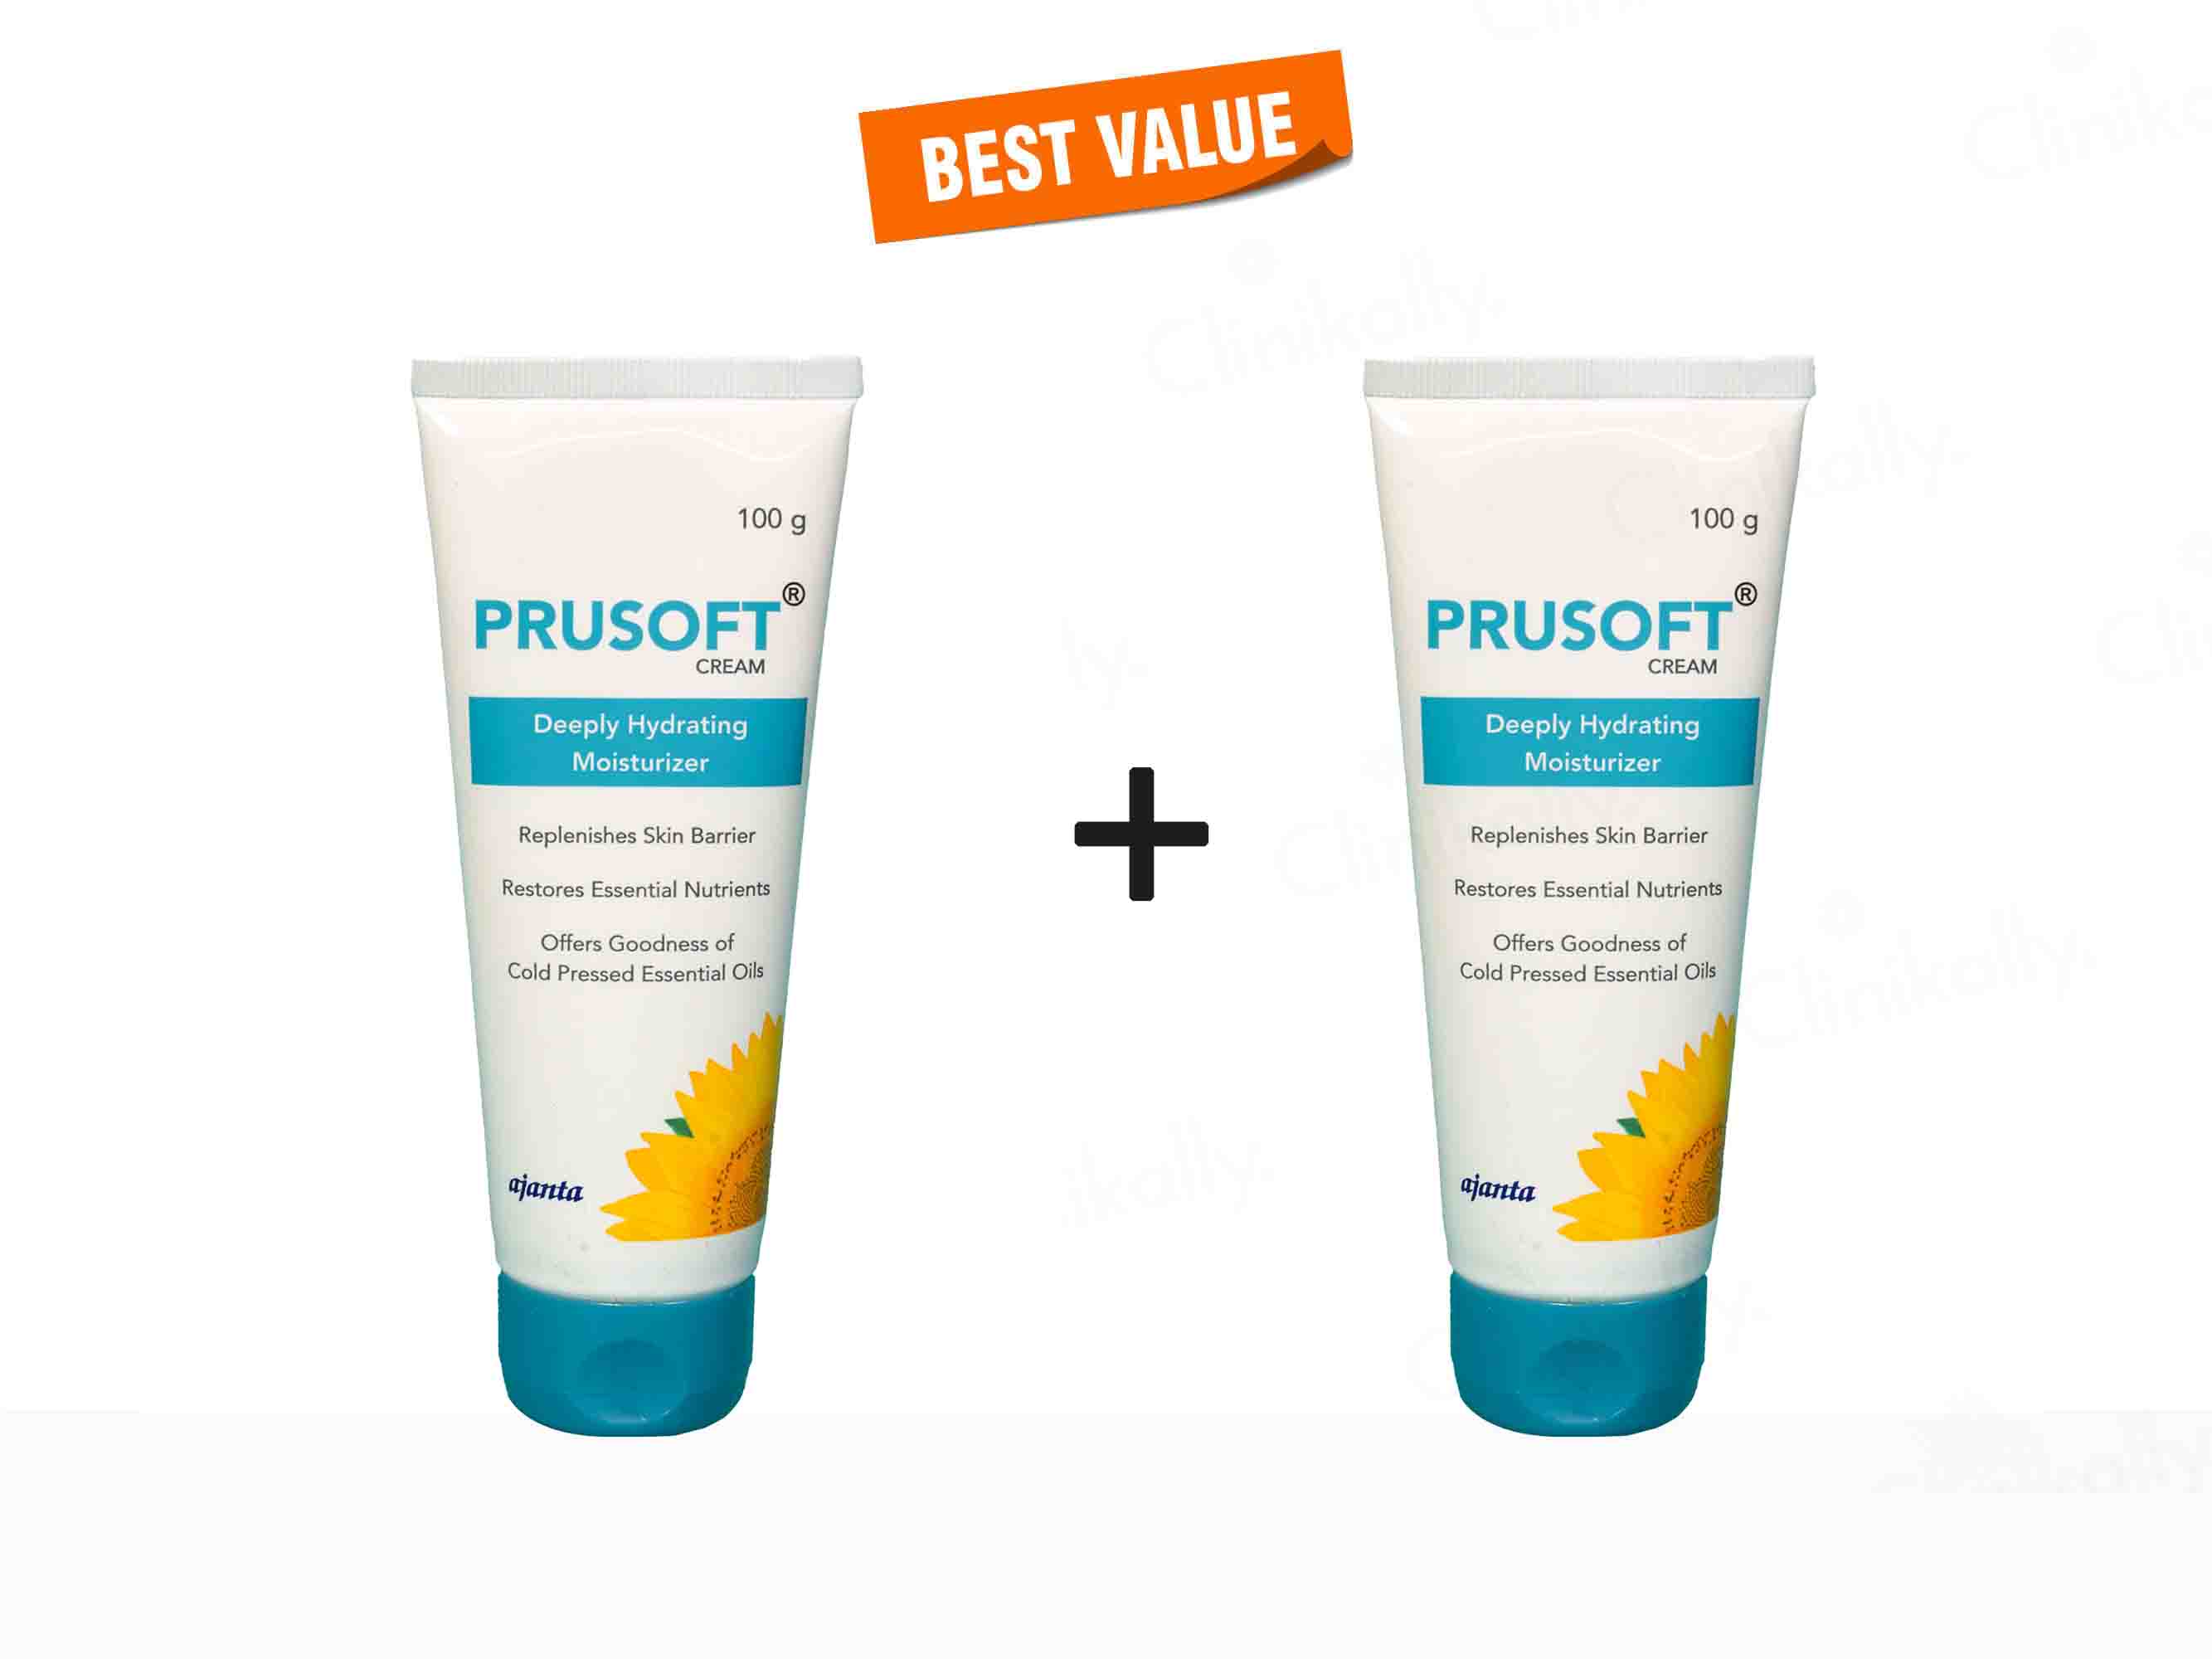 Prusoft deeply hydrating moisturzer cream - Clinikally